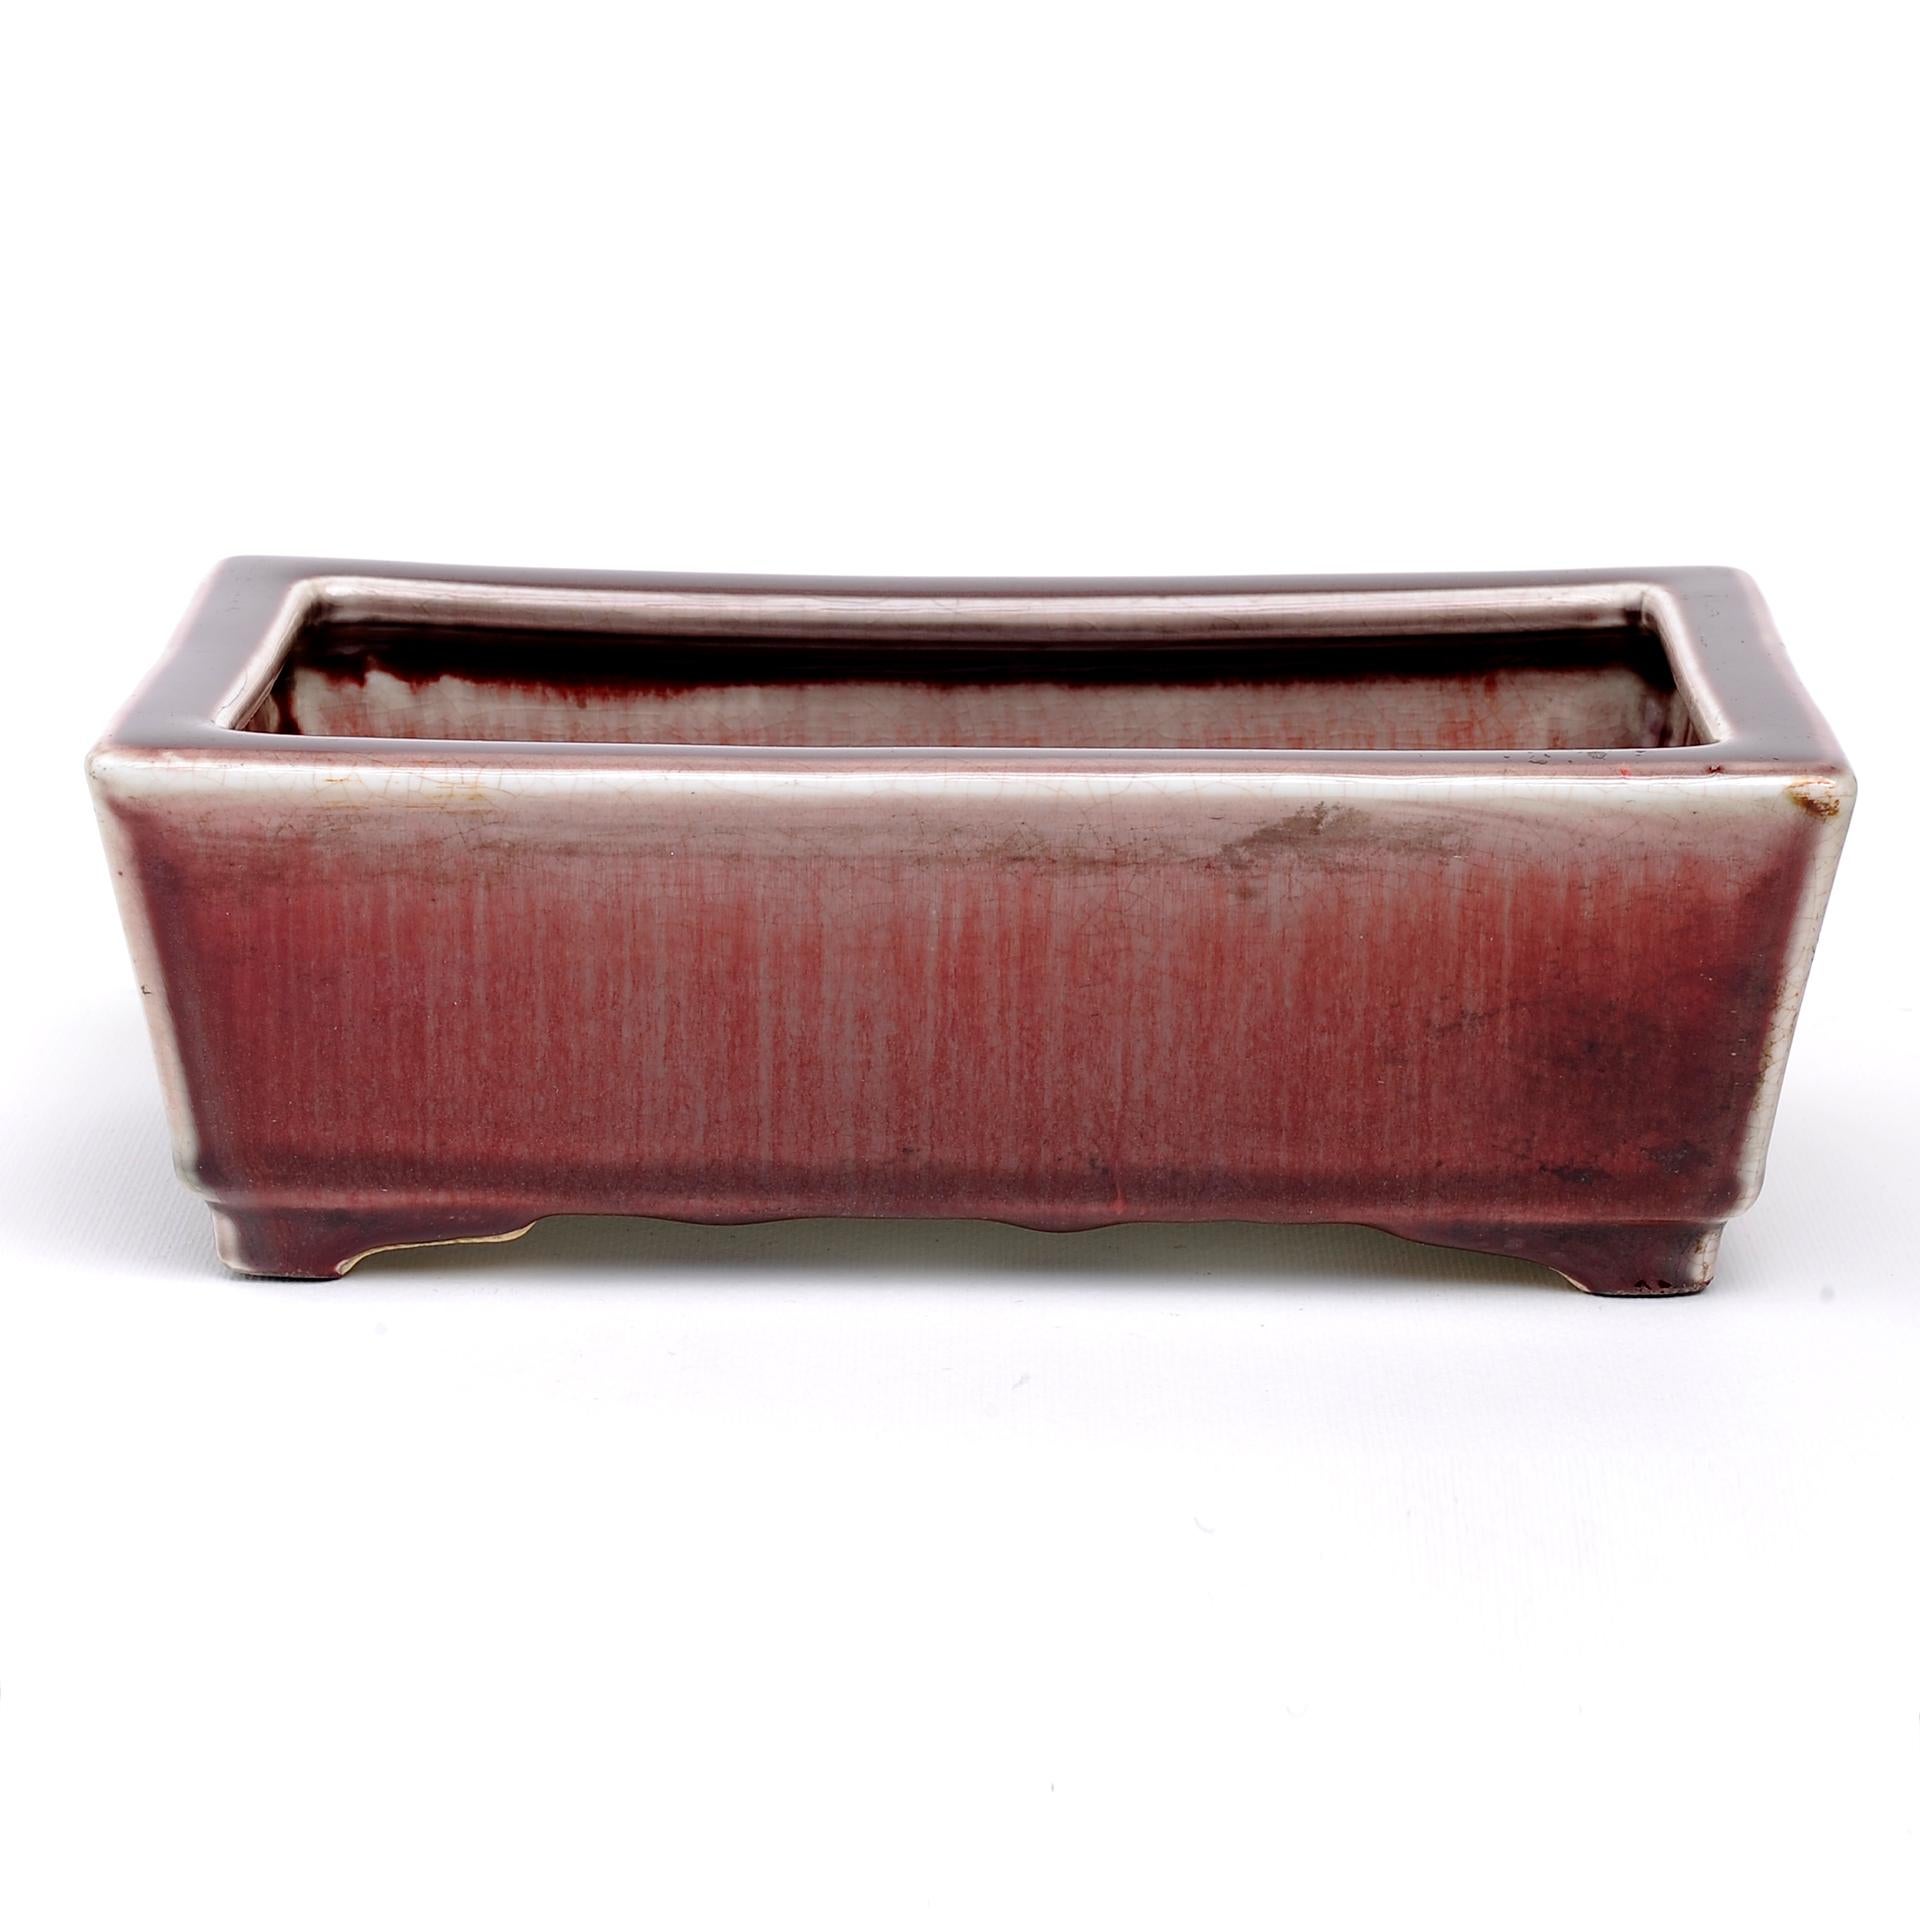 Bonsai rectangular pot in red porcelain. Simple, elegant, useful.